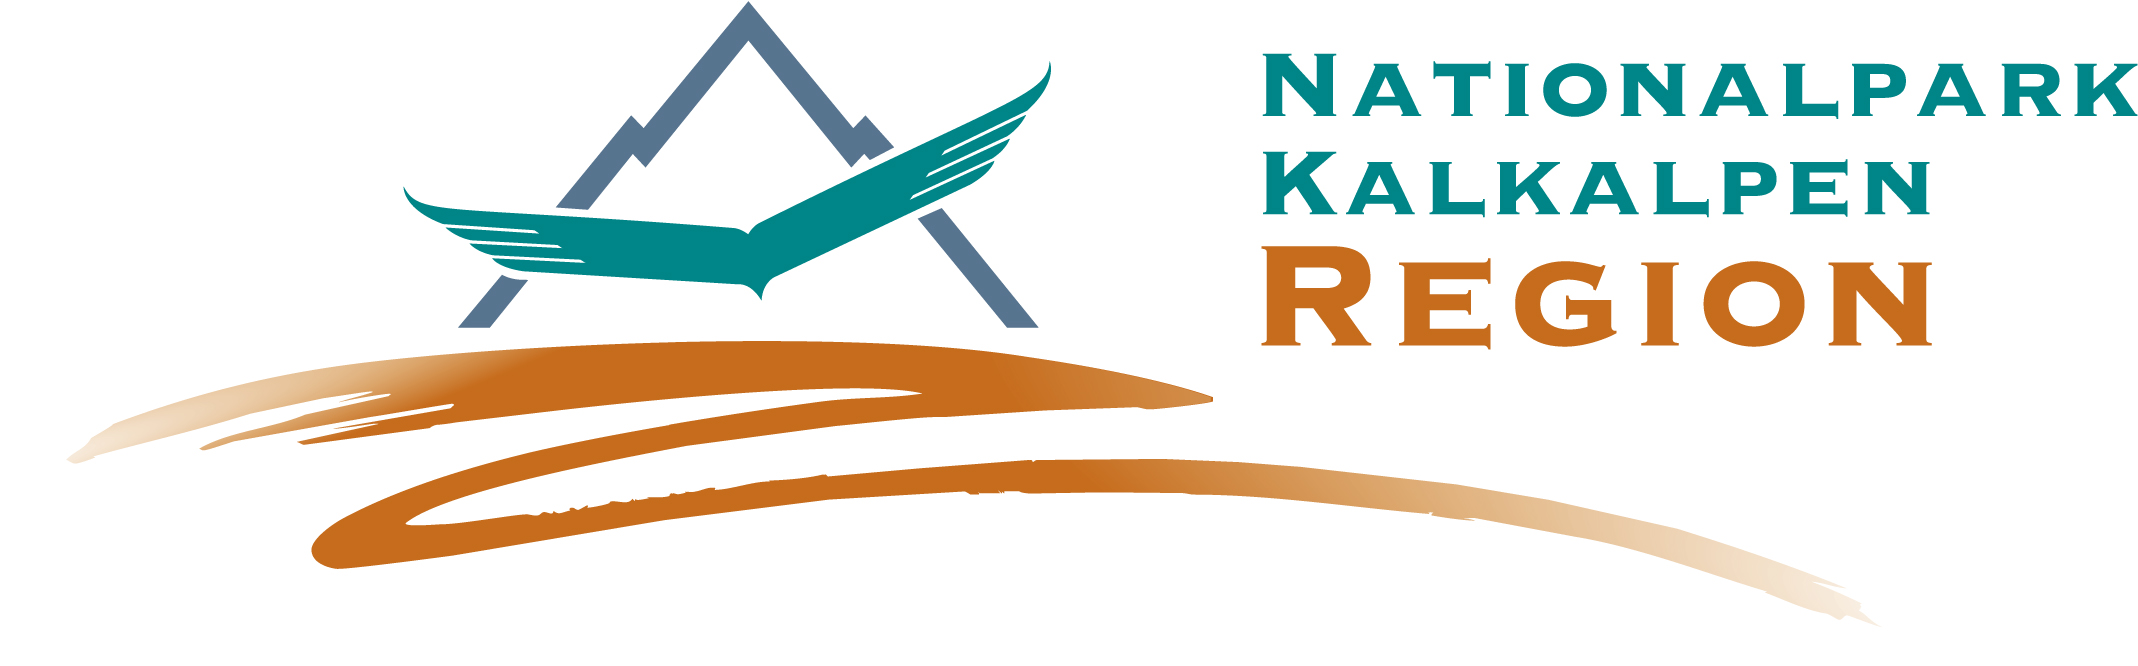 Nationalpark Kalkalpen Region